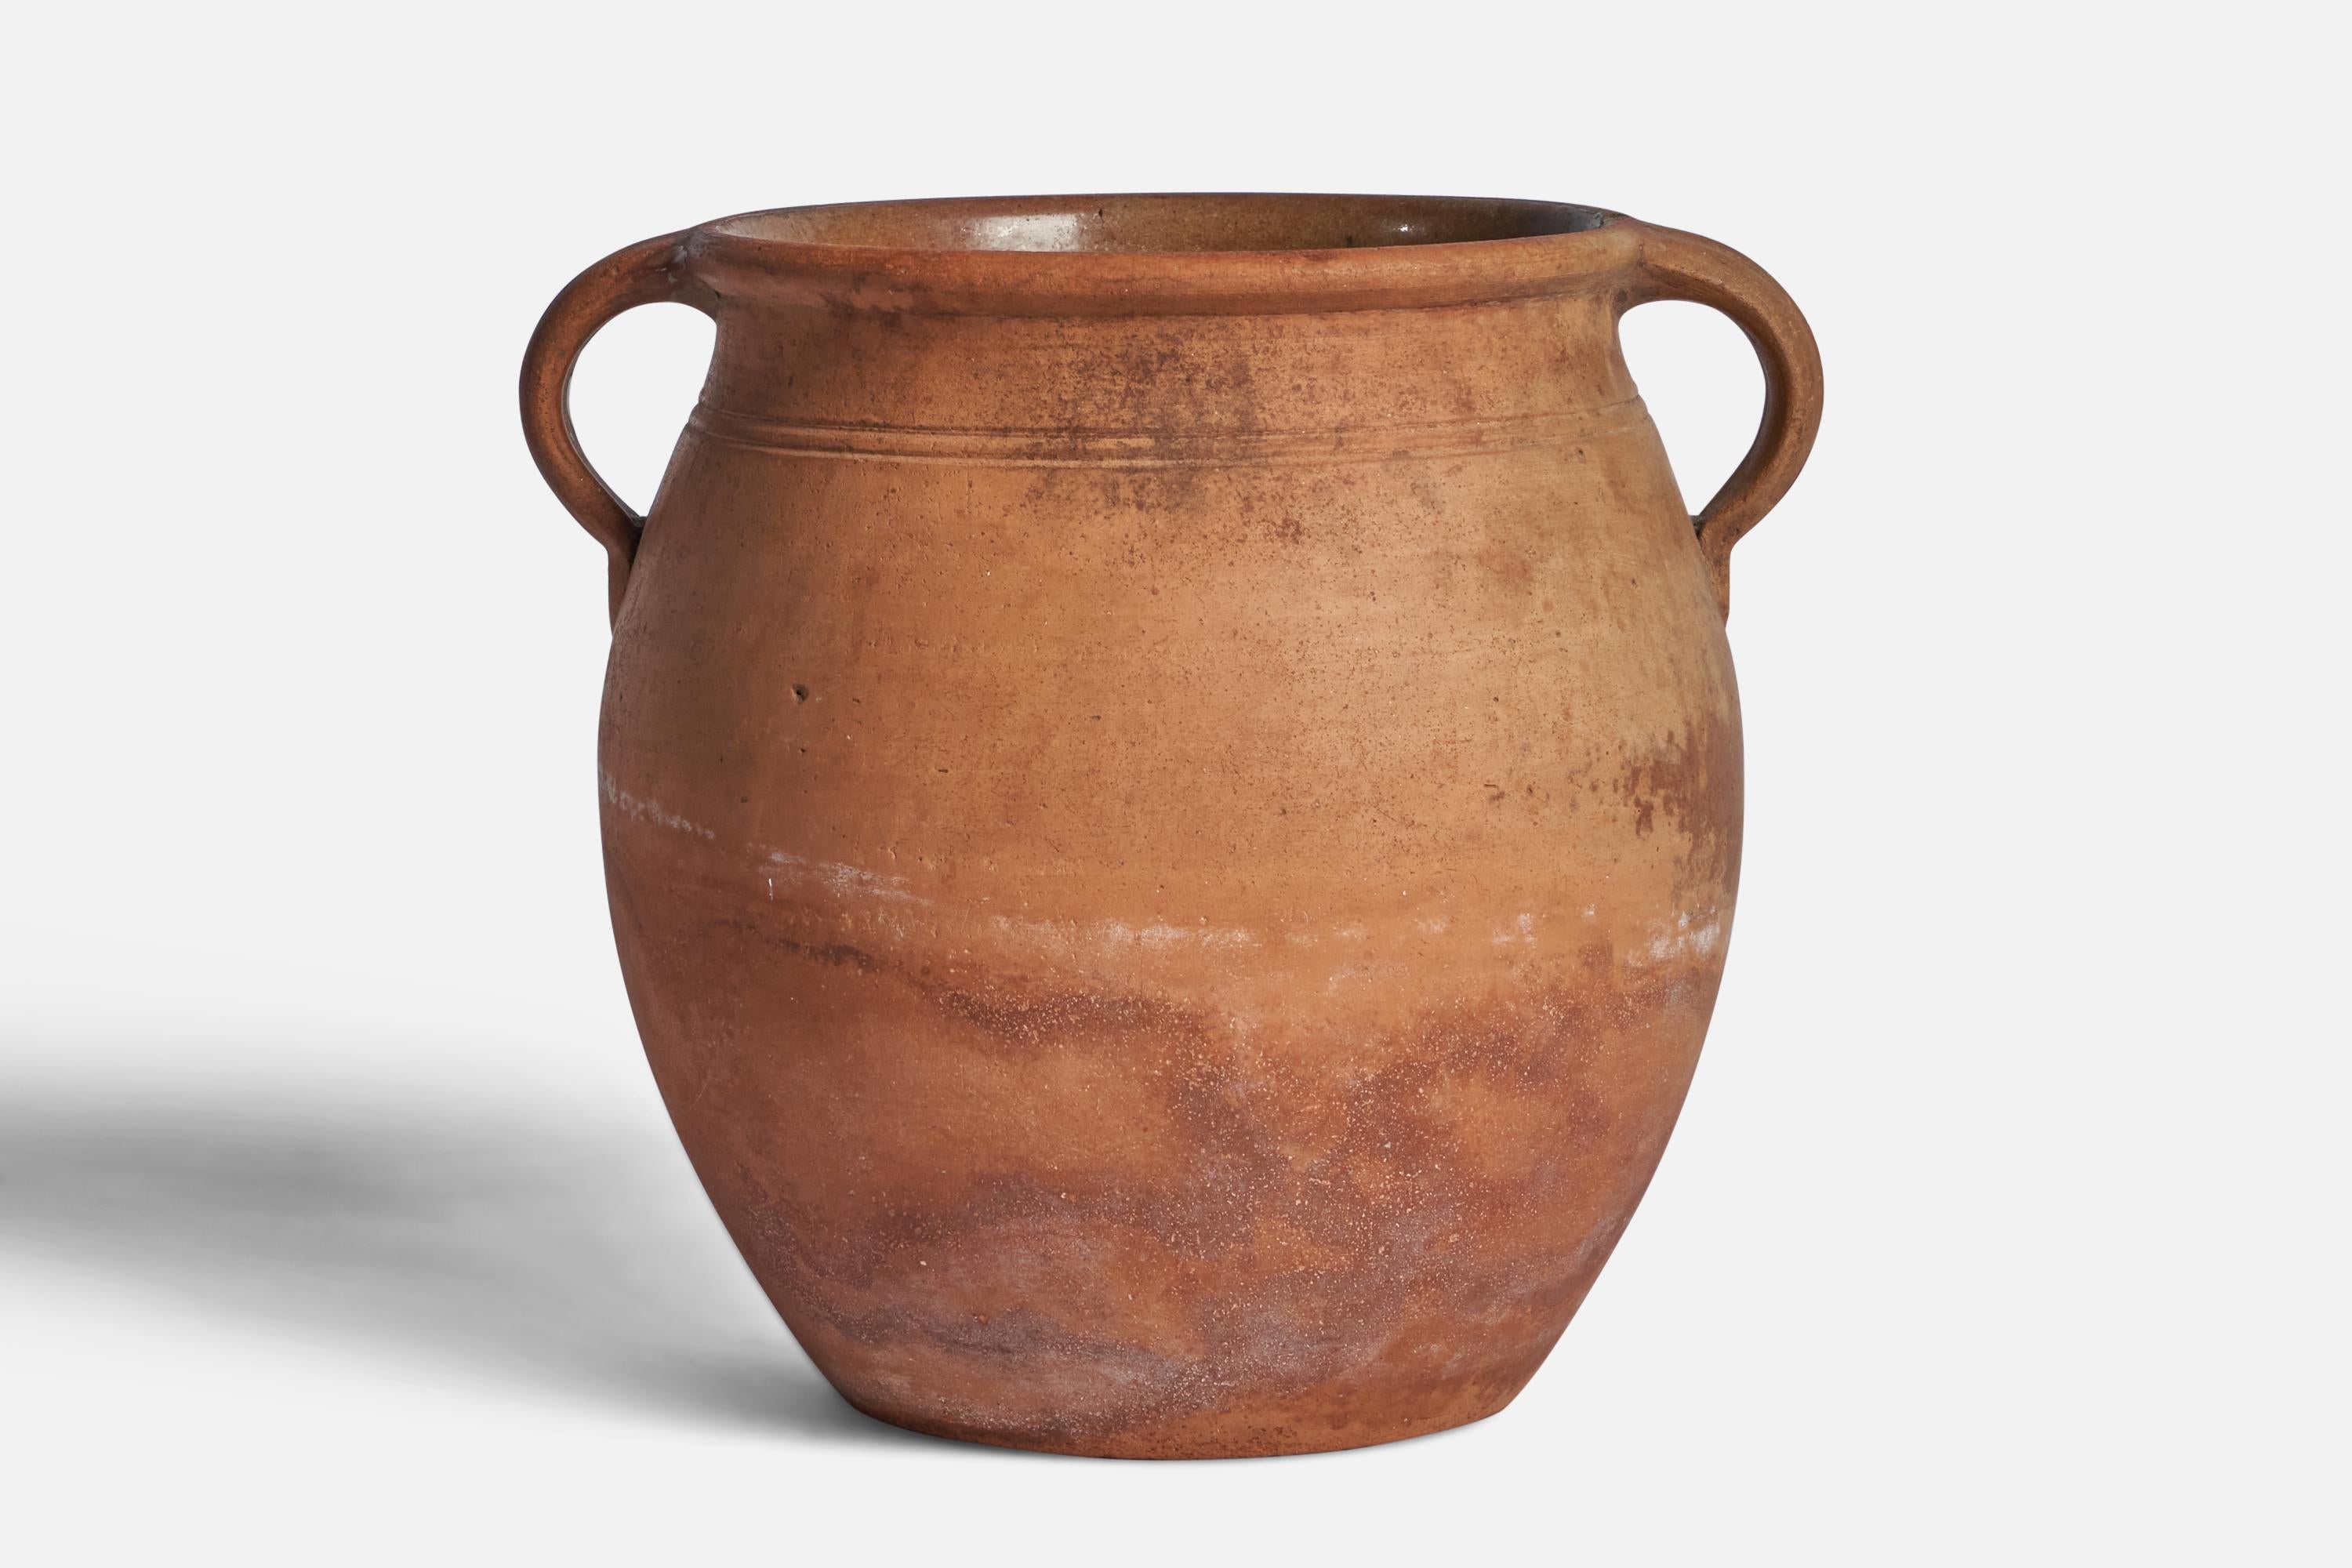 An unglazed terra-cotta earthenware vase designed and produced in Sweden, c. 1900.